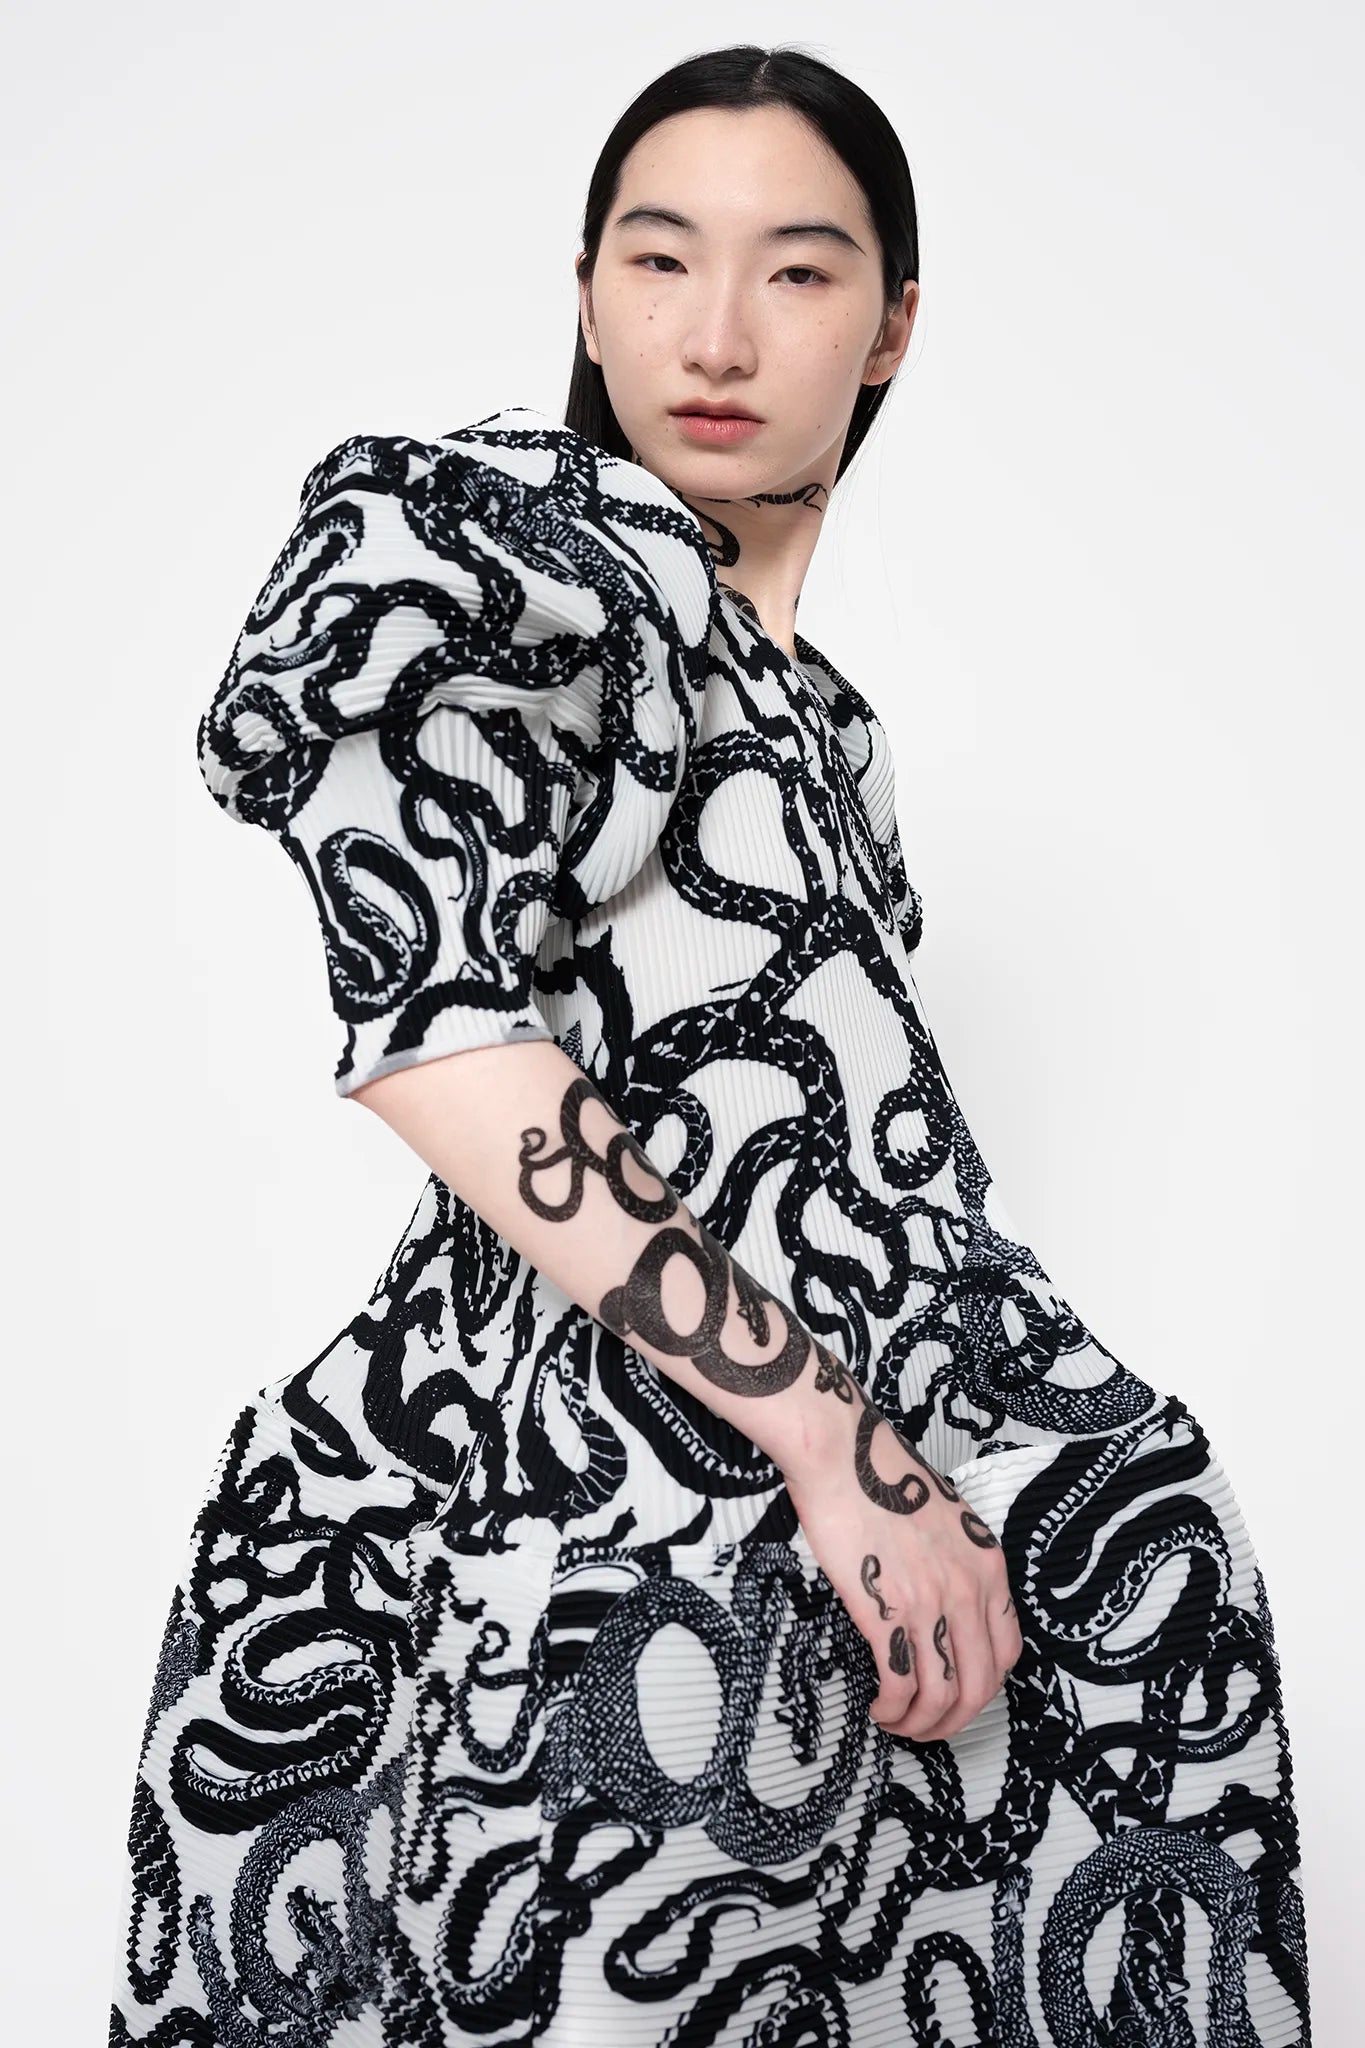 MELITTA BAUMEISTER - Big Sleeve Ripple Dress in Snake Print